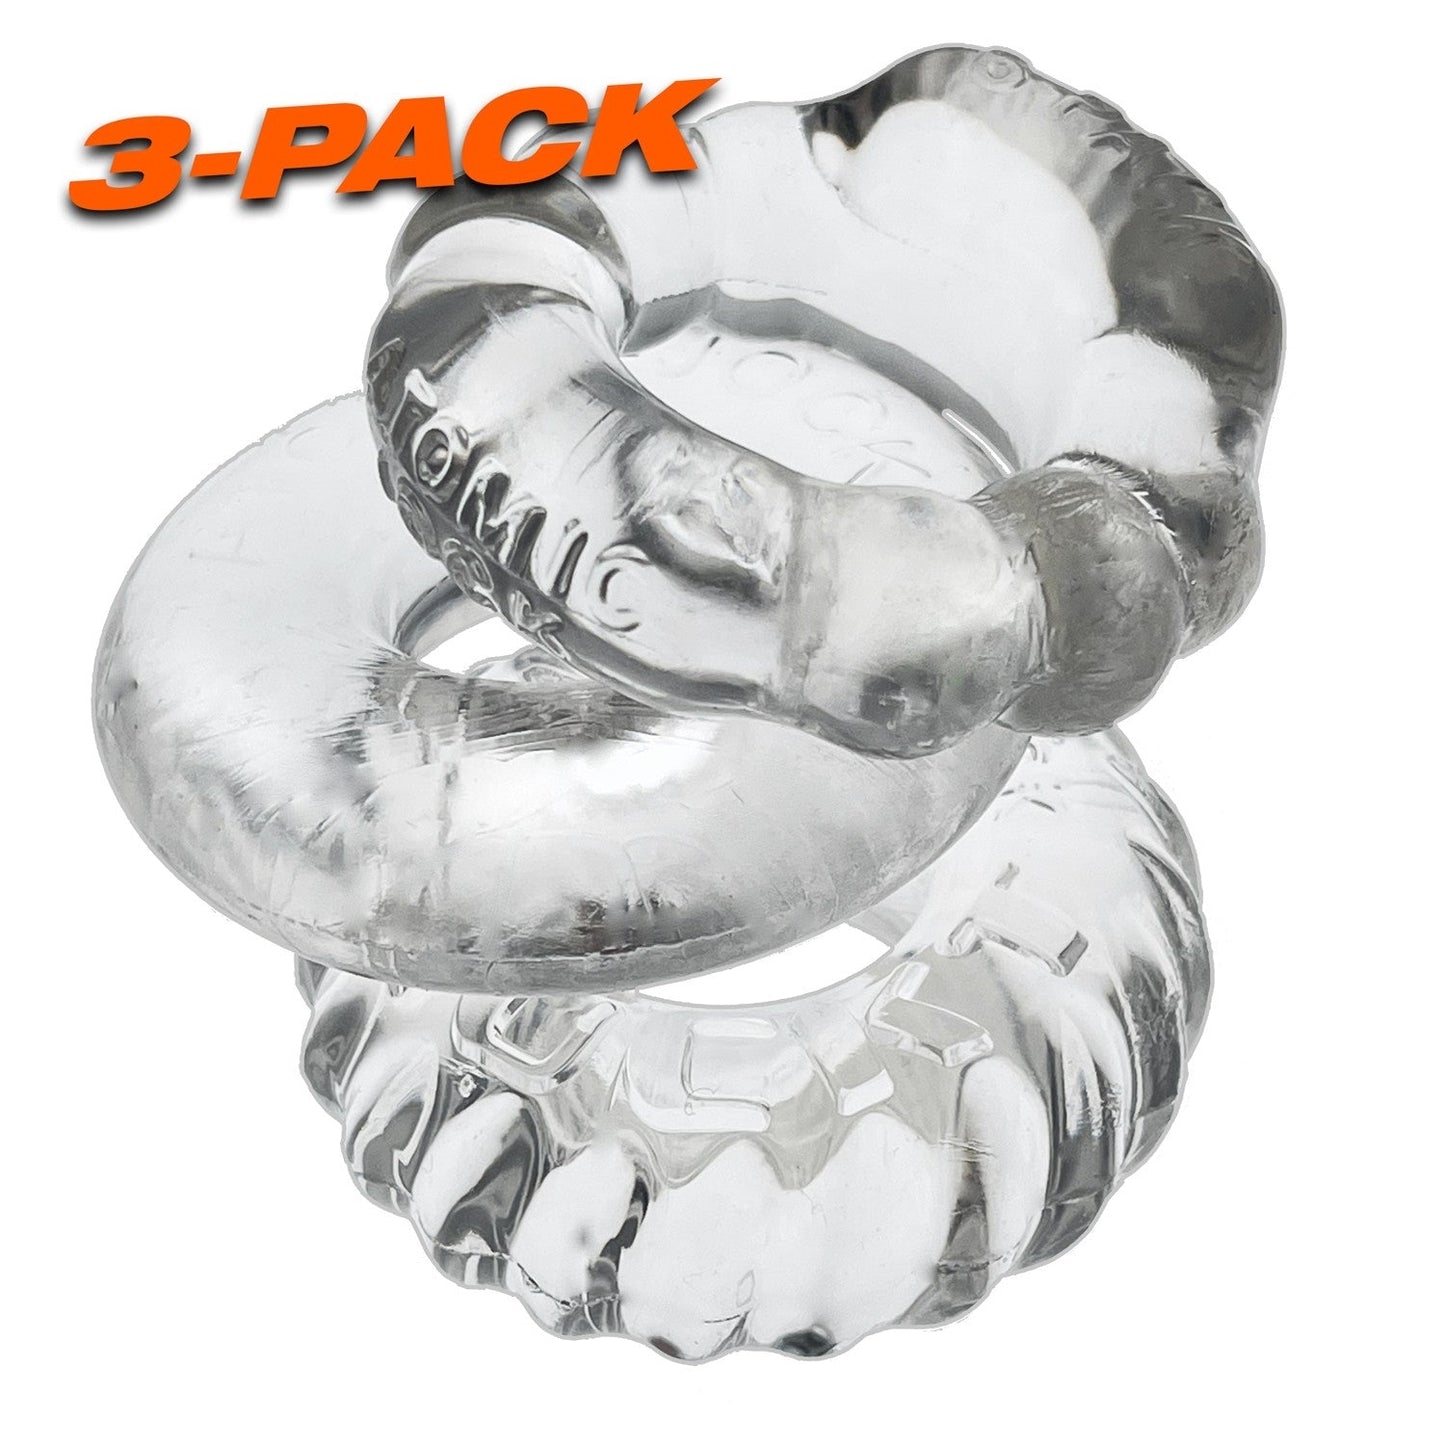 BONEMAKER 3-pack Cockring Kit - CLEAR